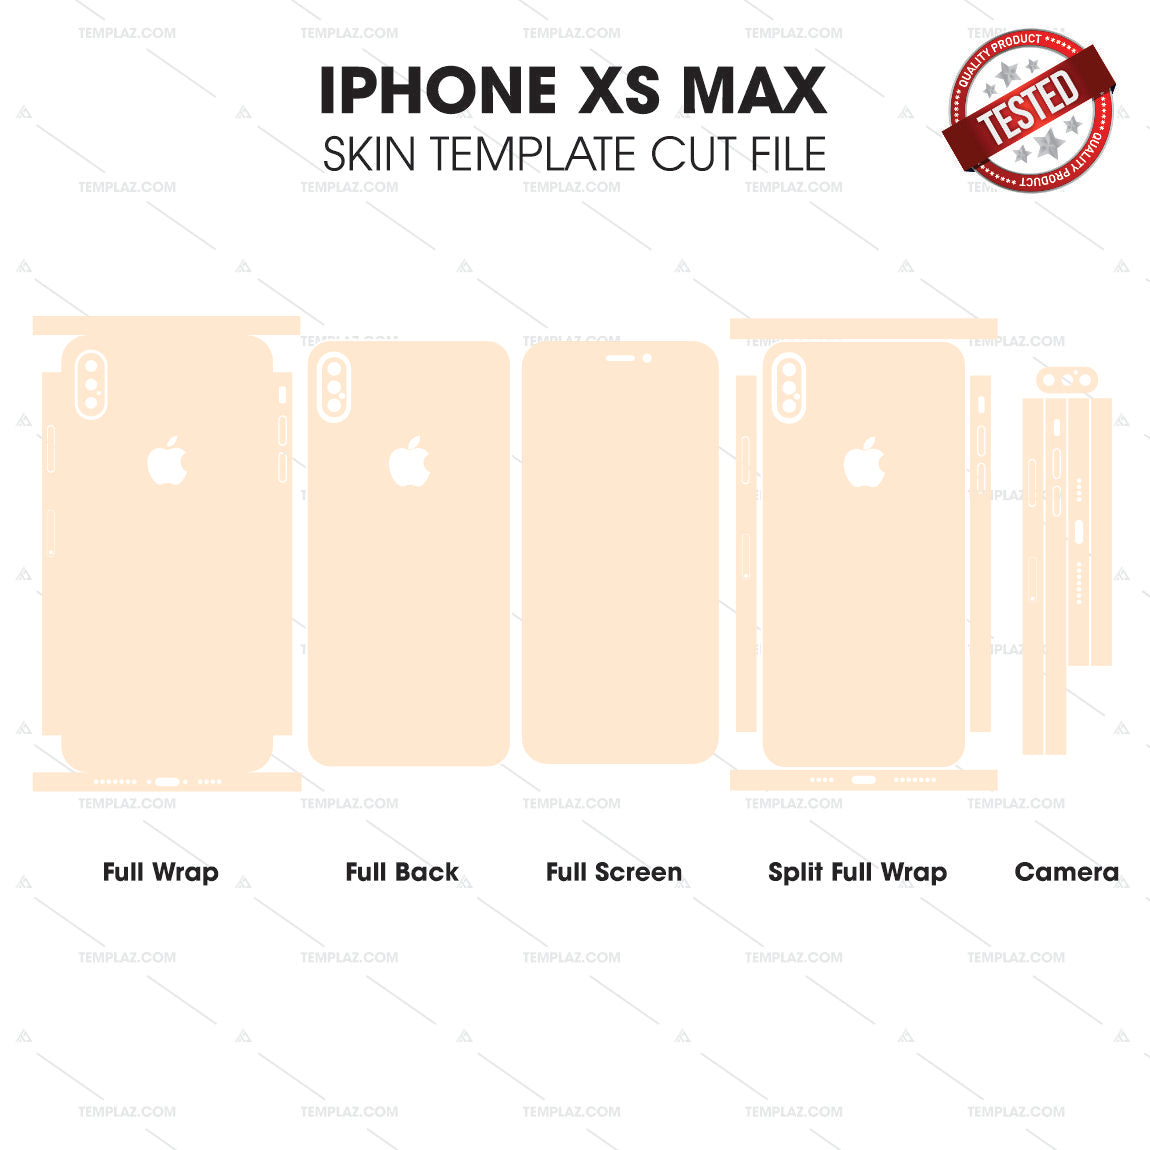 IPhone XS Max Skin Template Vector Cut File Bundle